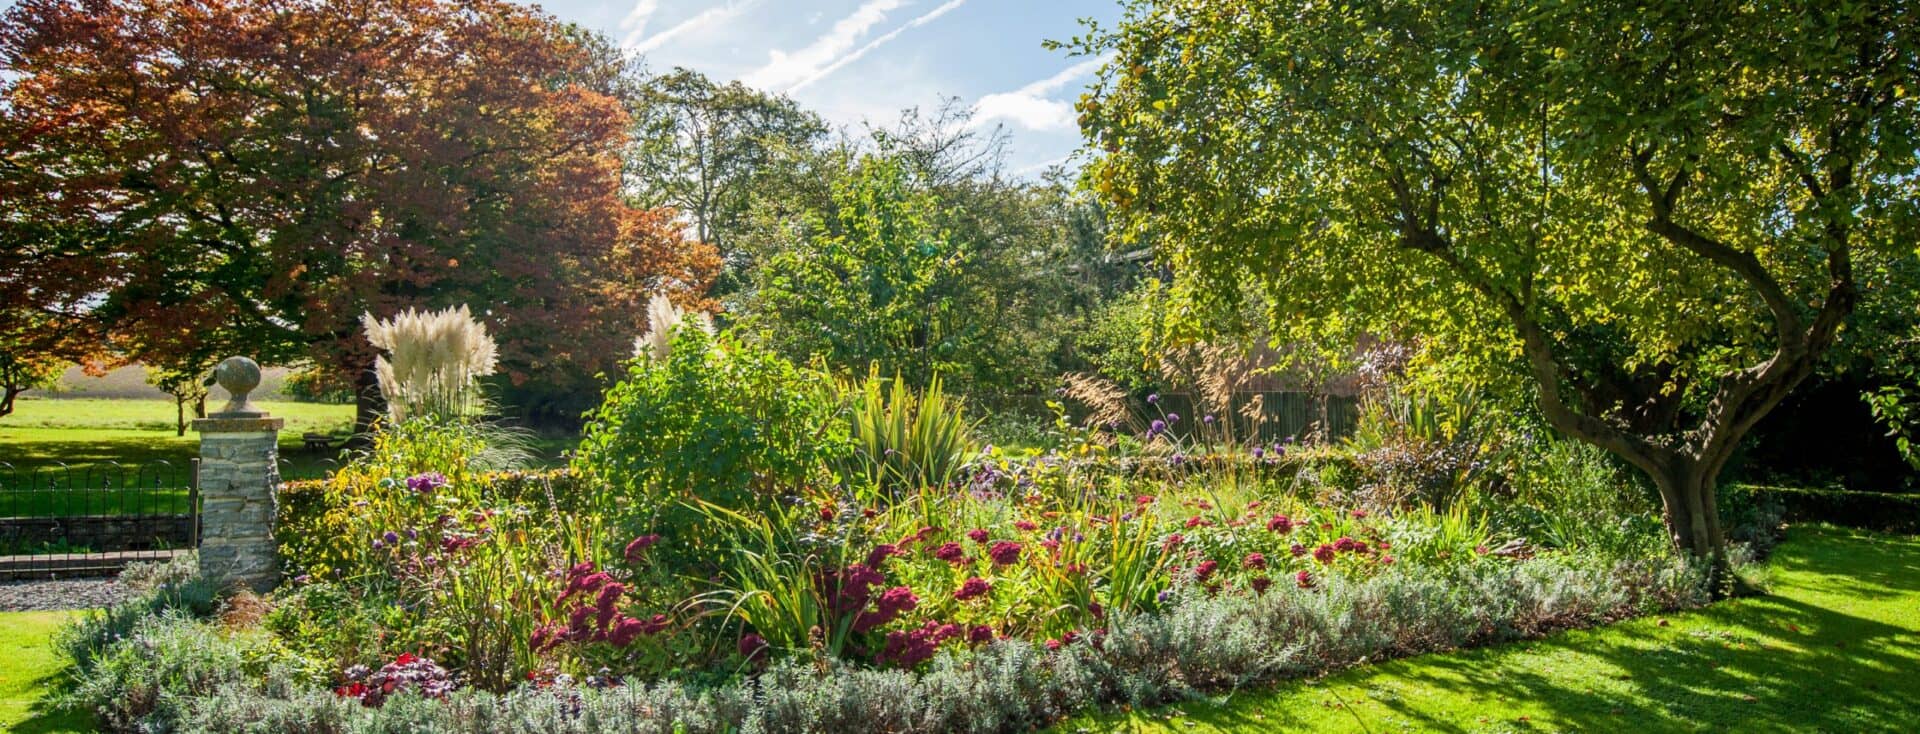 Gardens at Cossington Park House